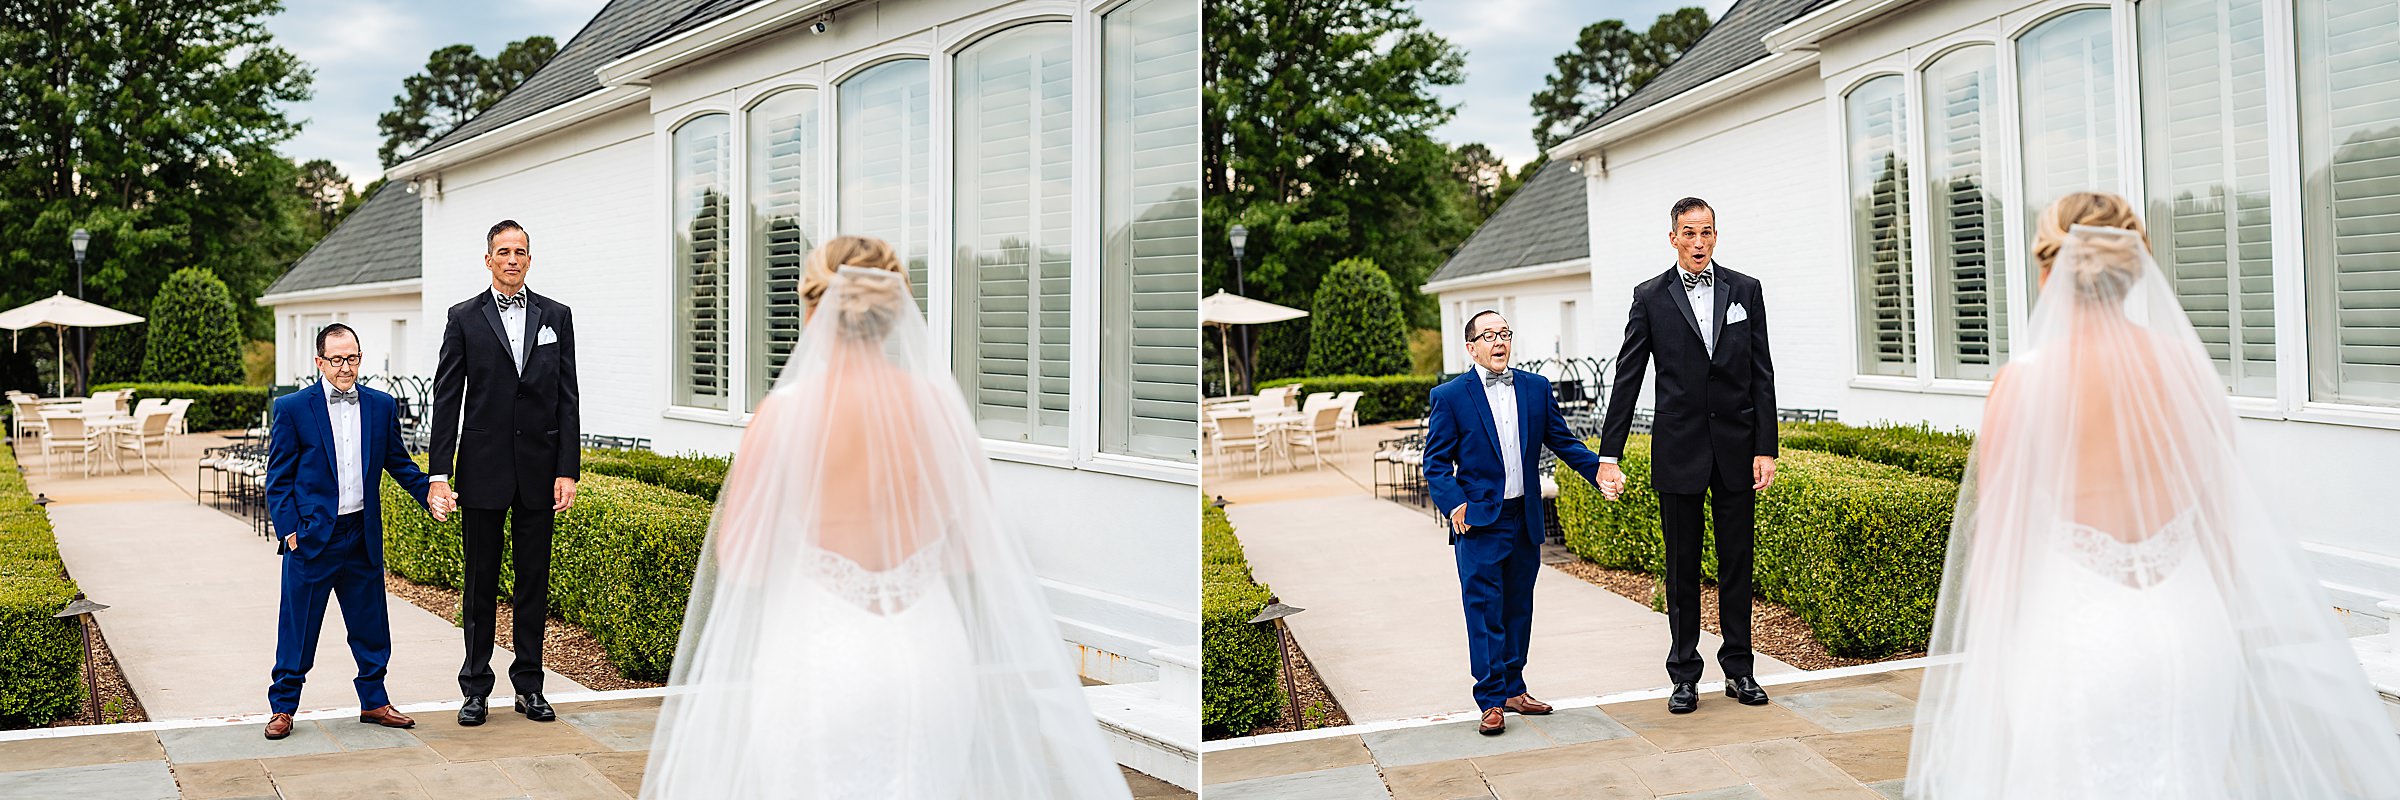 First Look with Dads | Hope Valley Country Club Wedding, Wedding, North Carolina Wedding Photographers, Durham Wedding Photographers, Country Club Wedding | kivusandcamera.com